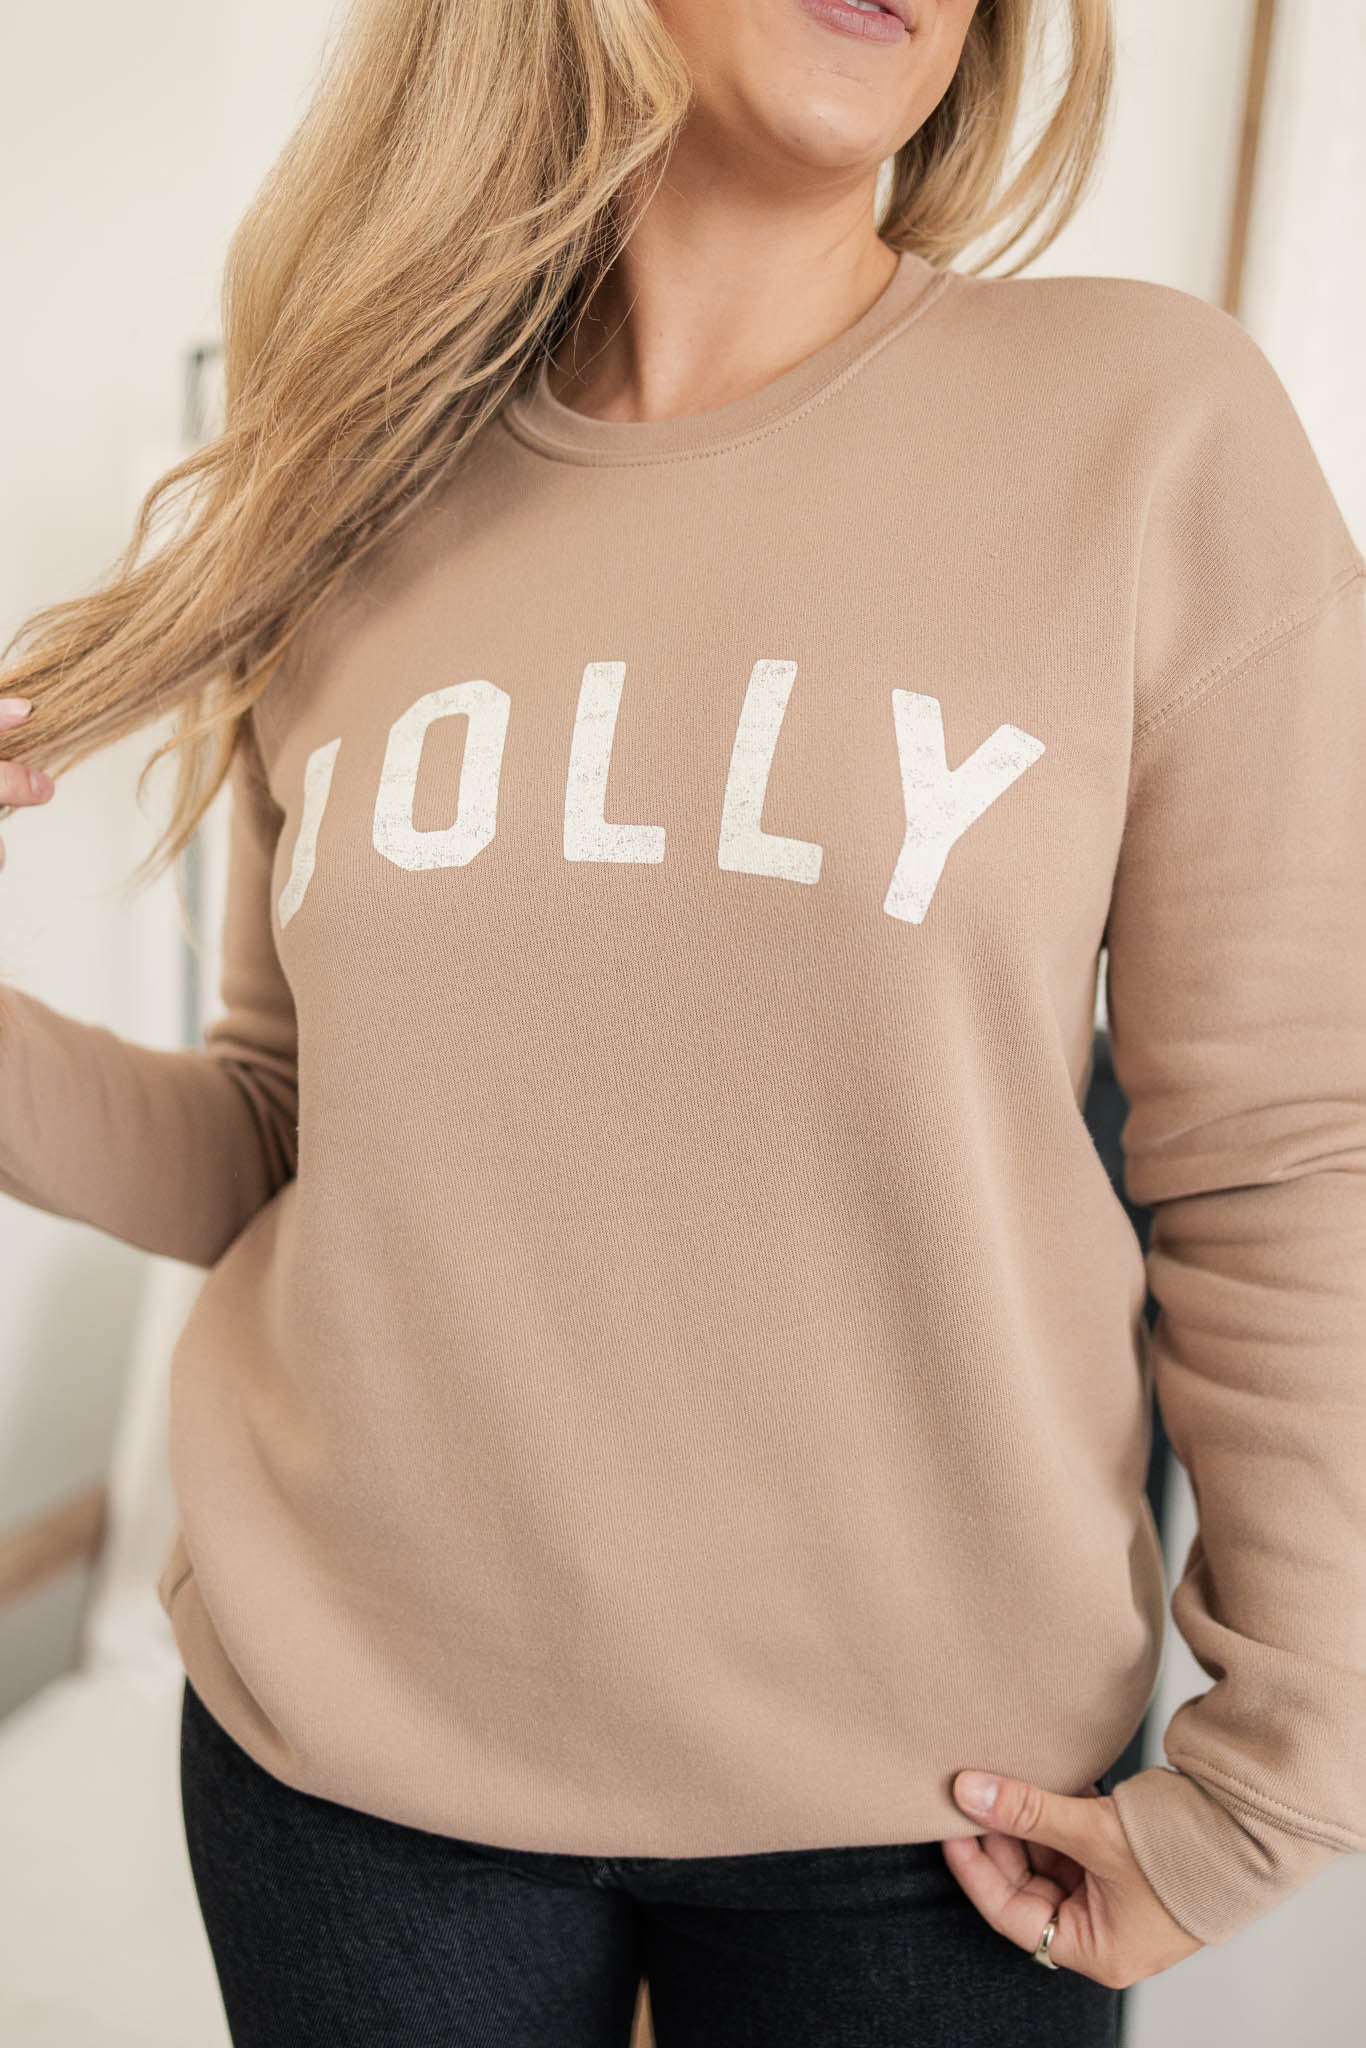 Jolly Sweatshirt